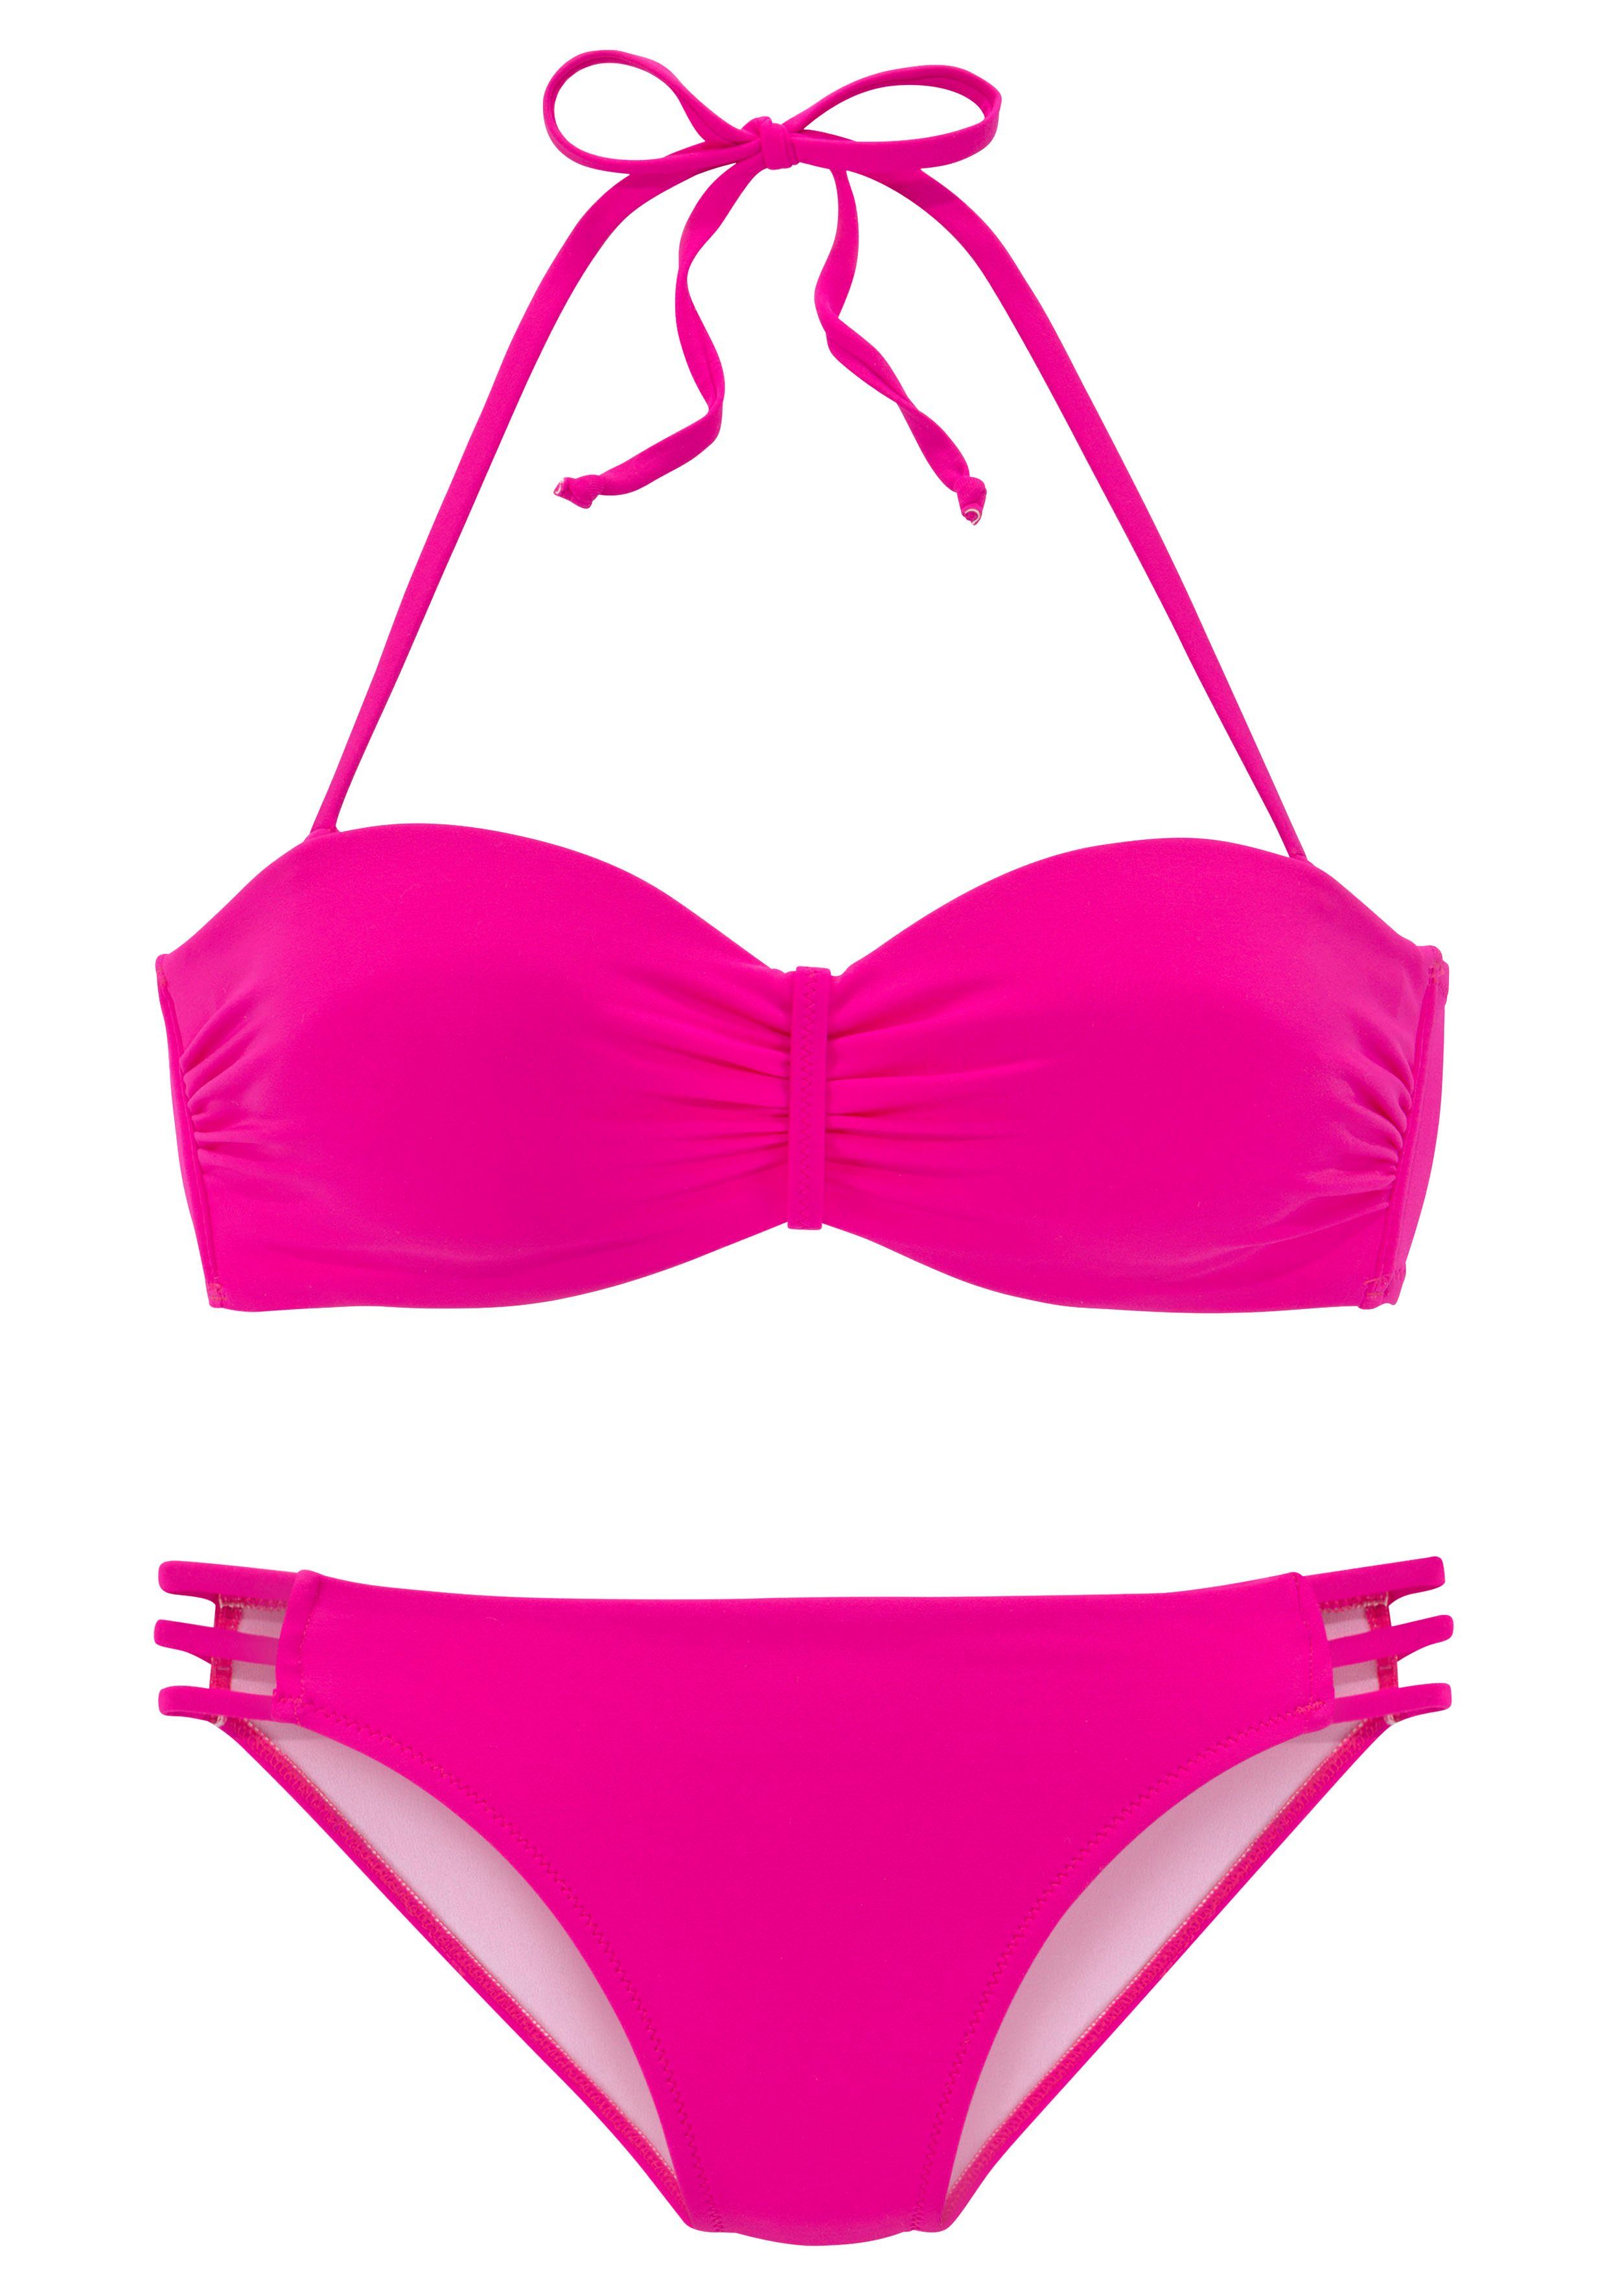 Vivance Bügel-Bandeau-Bikini in pink Unifarbe trendiger